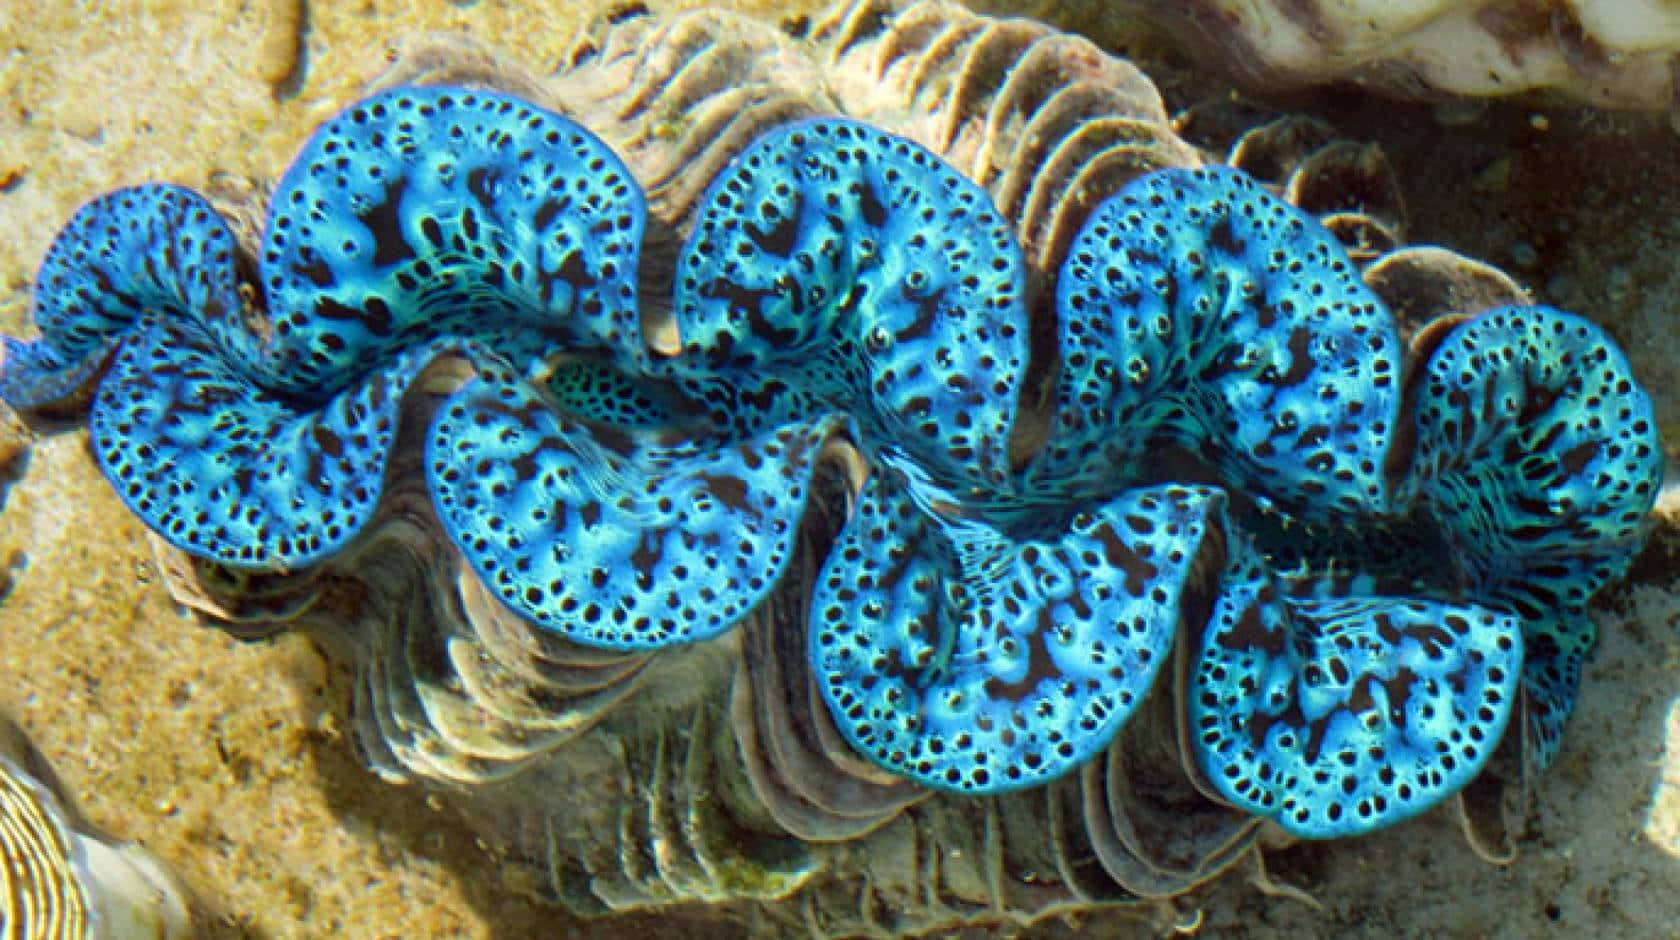 Vibrant Blue Giant Clam Underwater Wallpaper